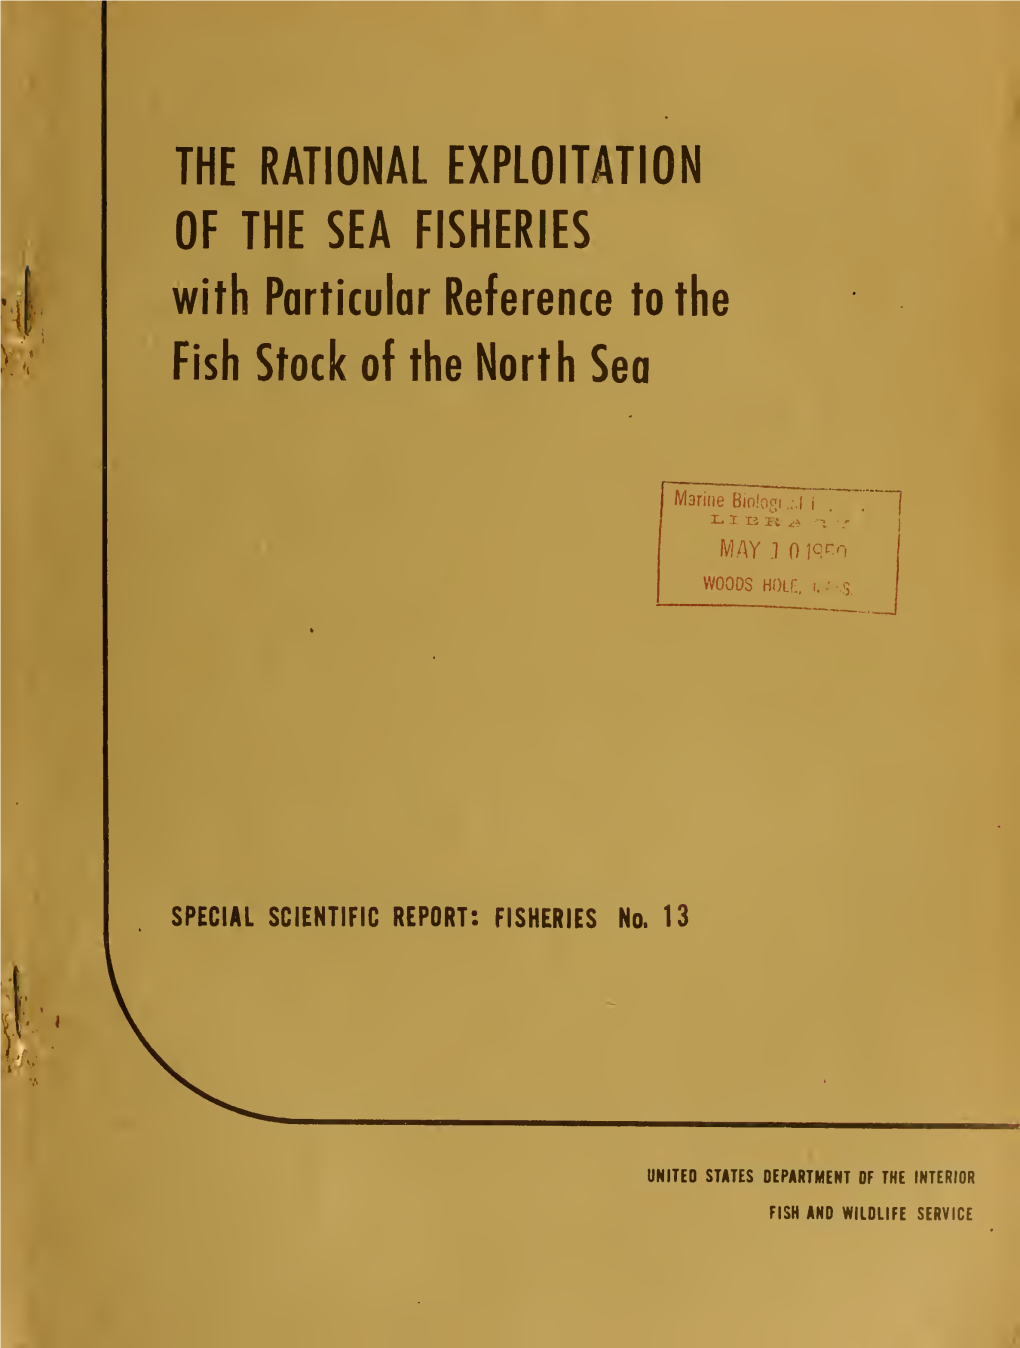 SPECIAL SCIENTIFIC REPORT: FISHERIES No